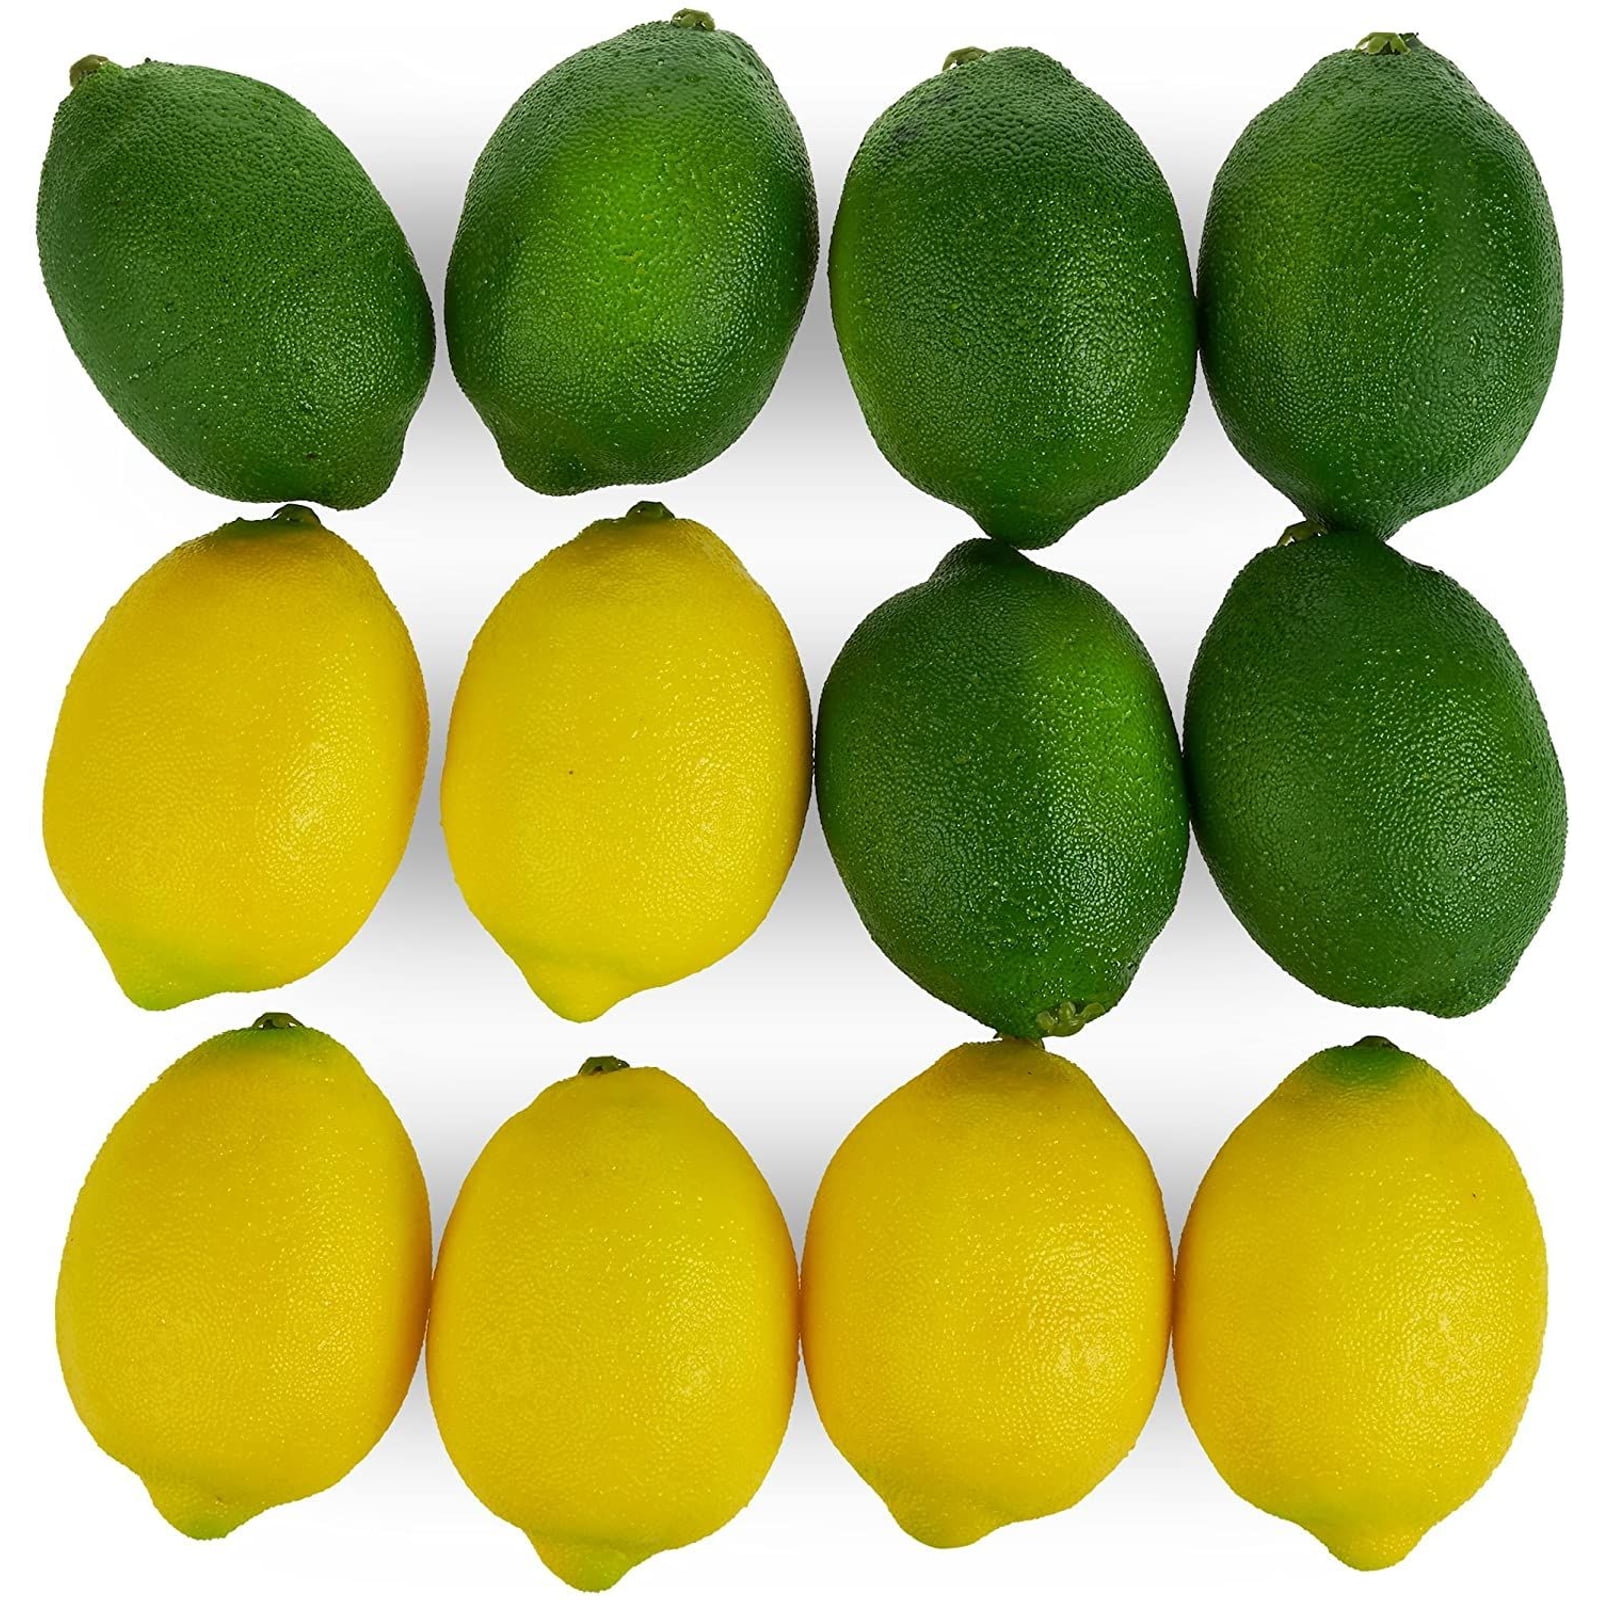 Lifelike faux fruit Yellow Lemon artificial theater prop realistic size 